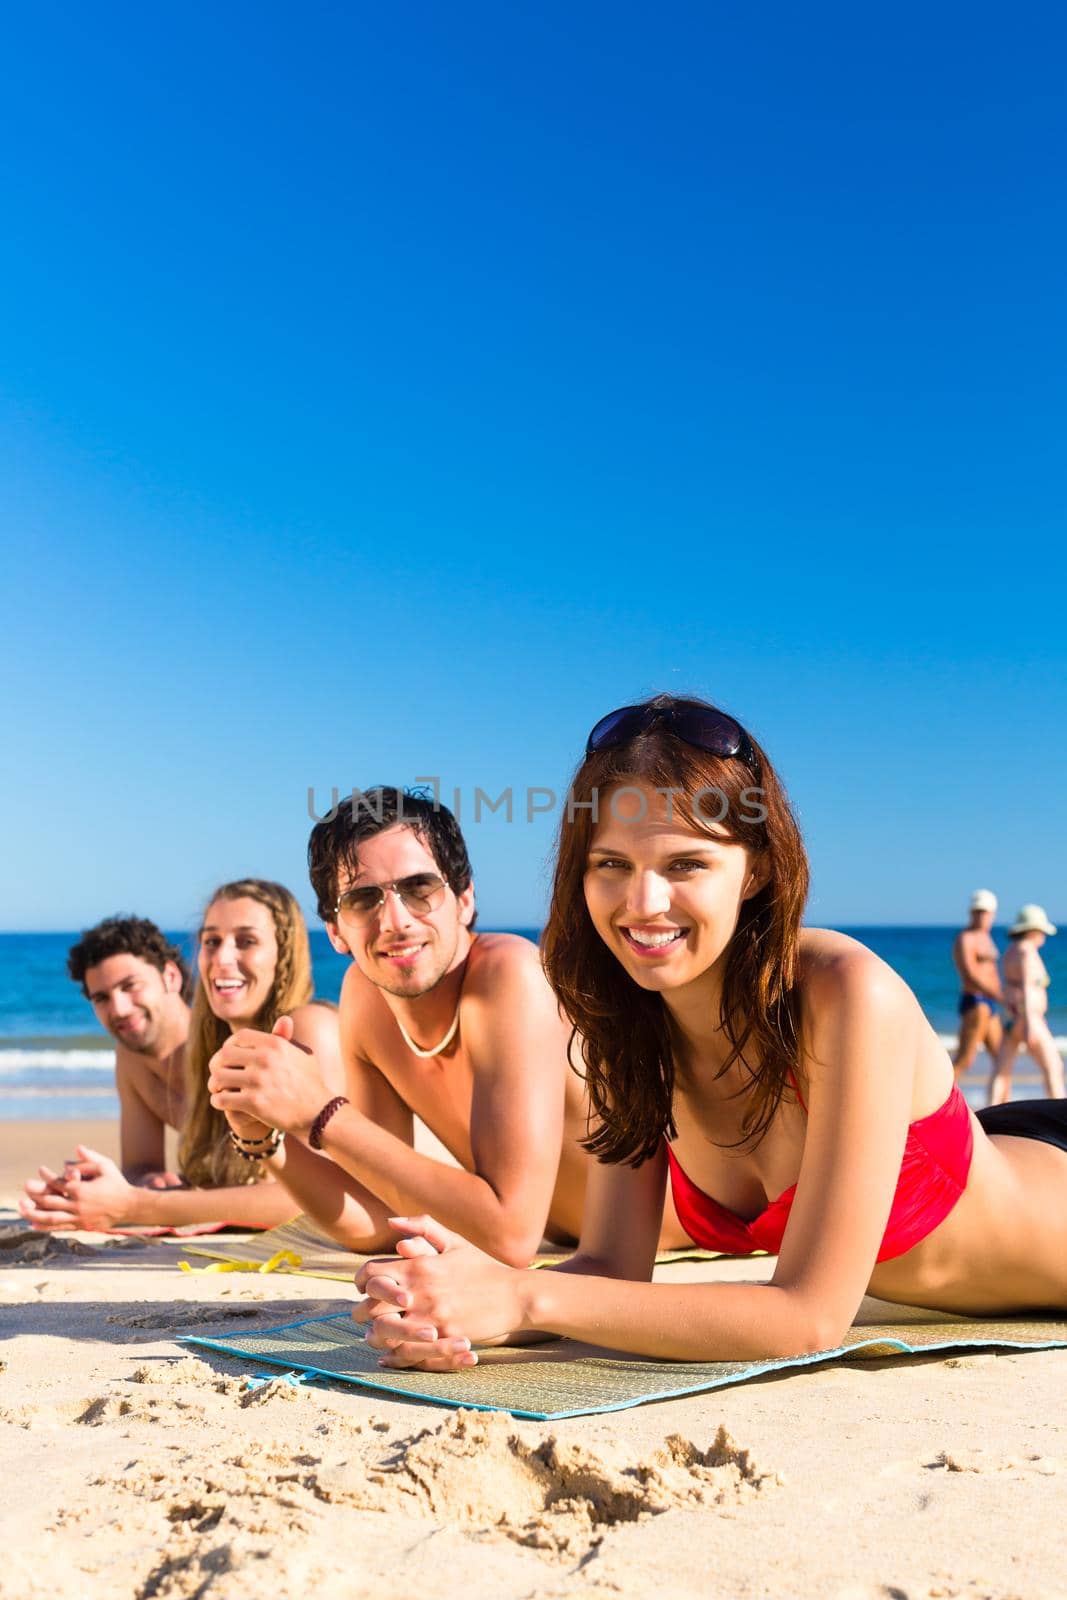 Friends on beach vacation in summer by Kzenon